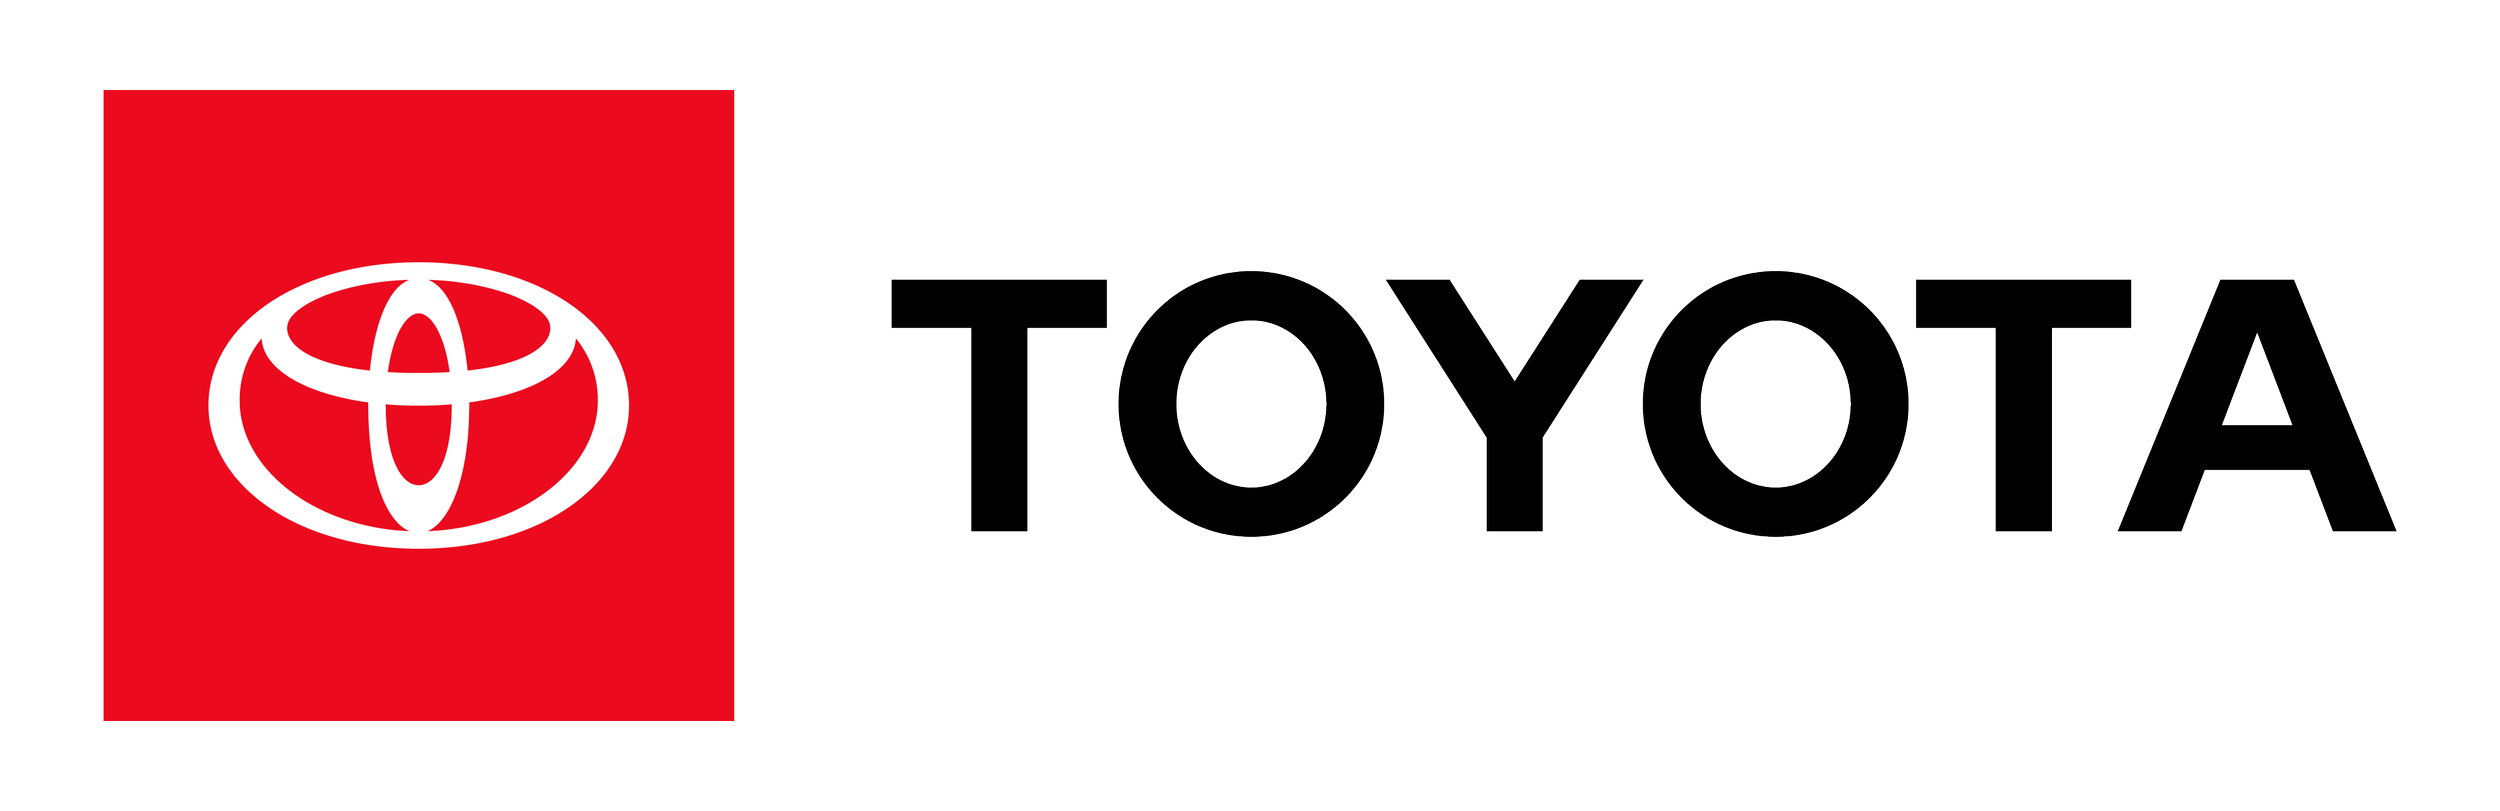 toyota-logo-2019-3700x1200.png